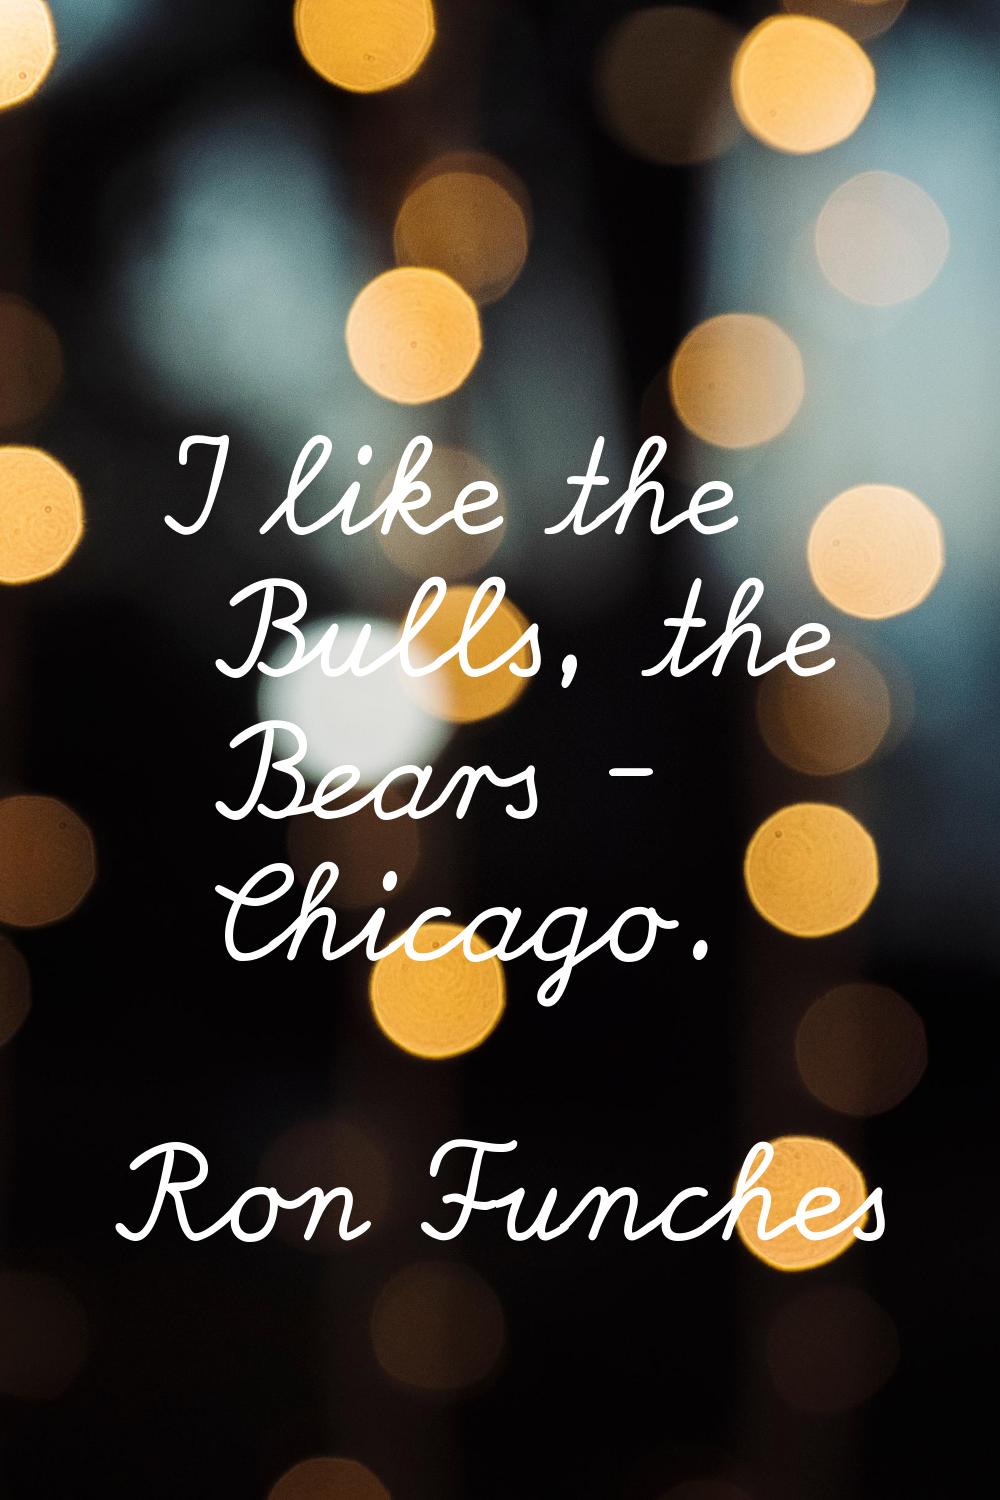 I like the Bulls, the Bears - Chicago.